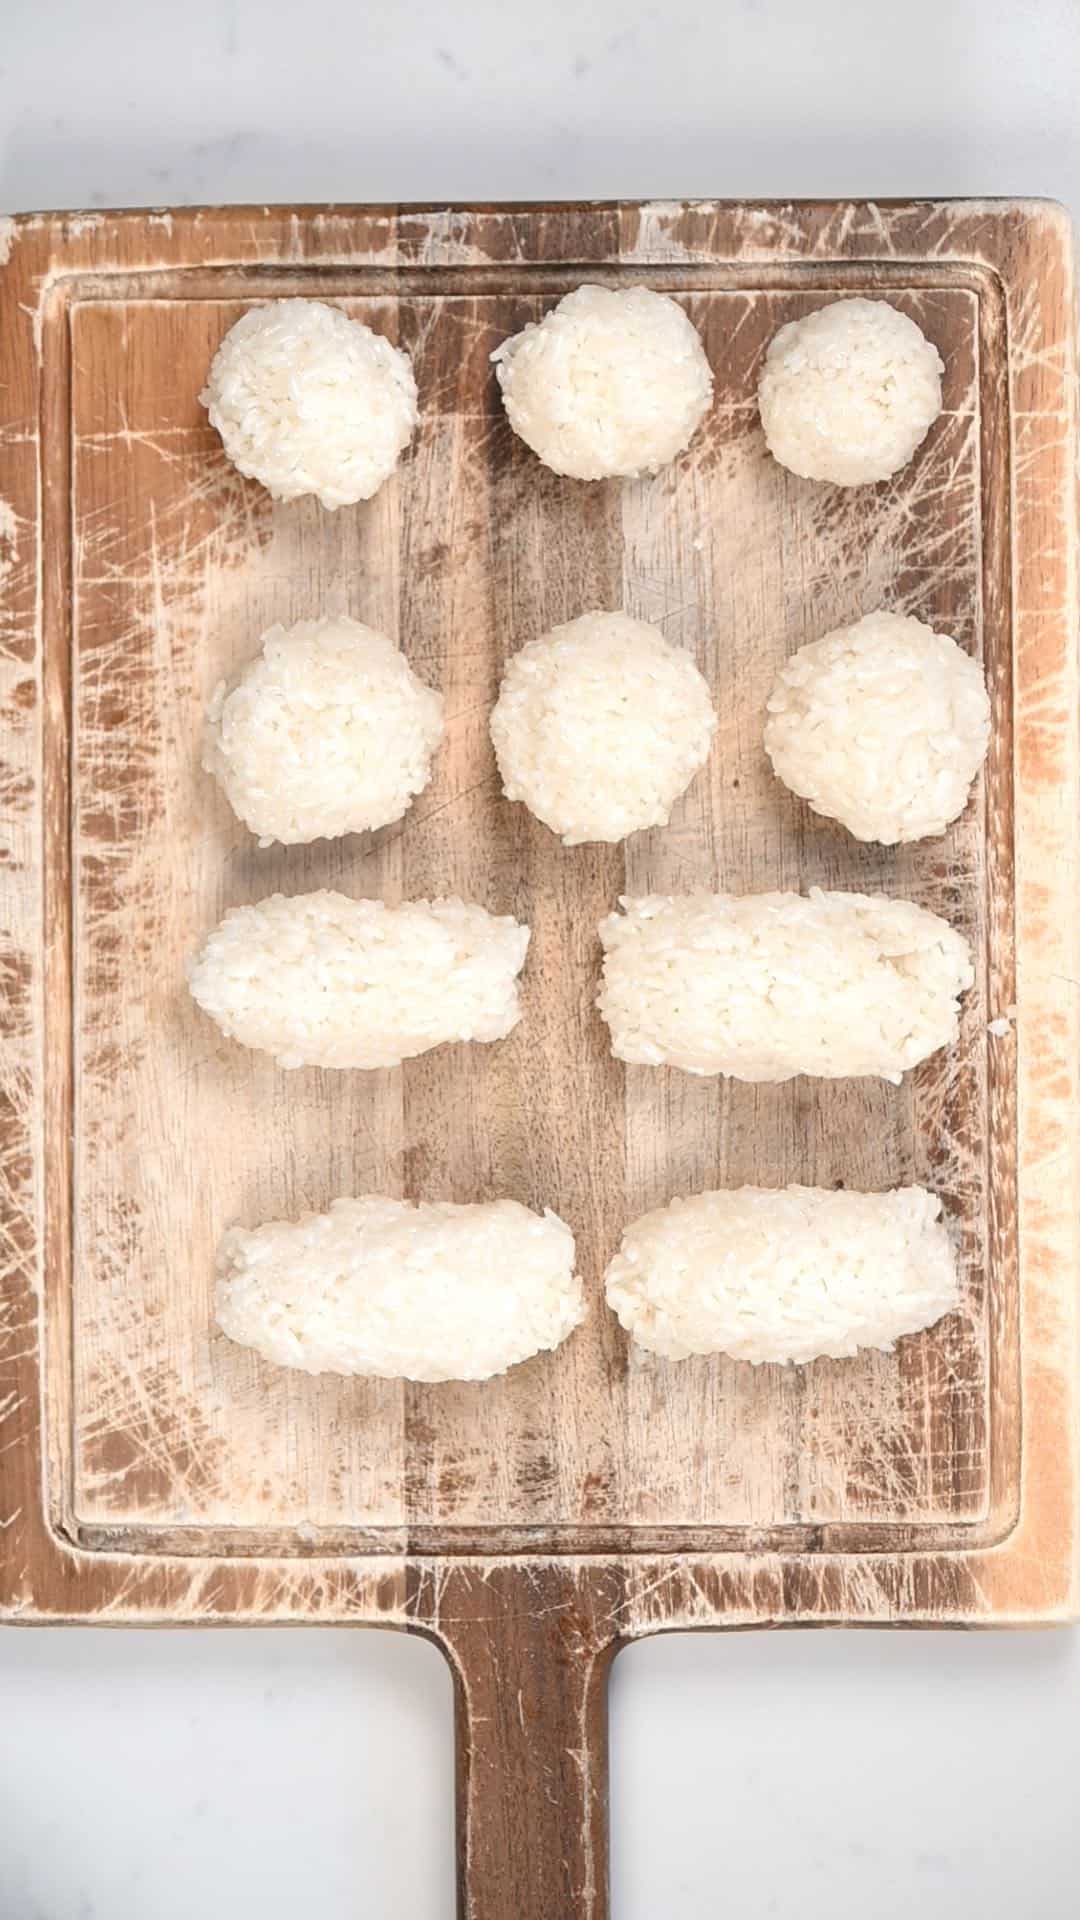 sushi rice and rice balls